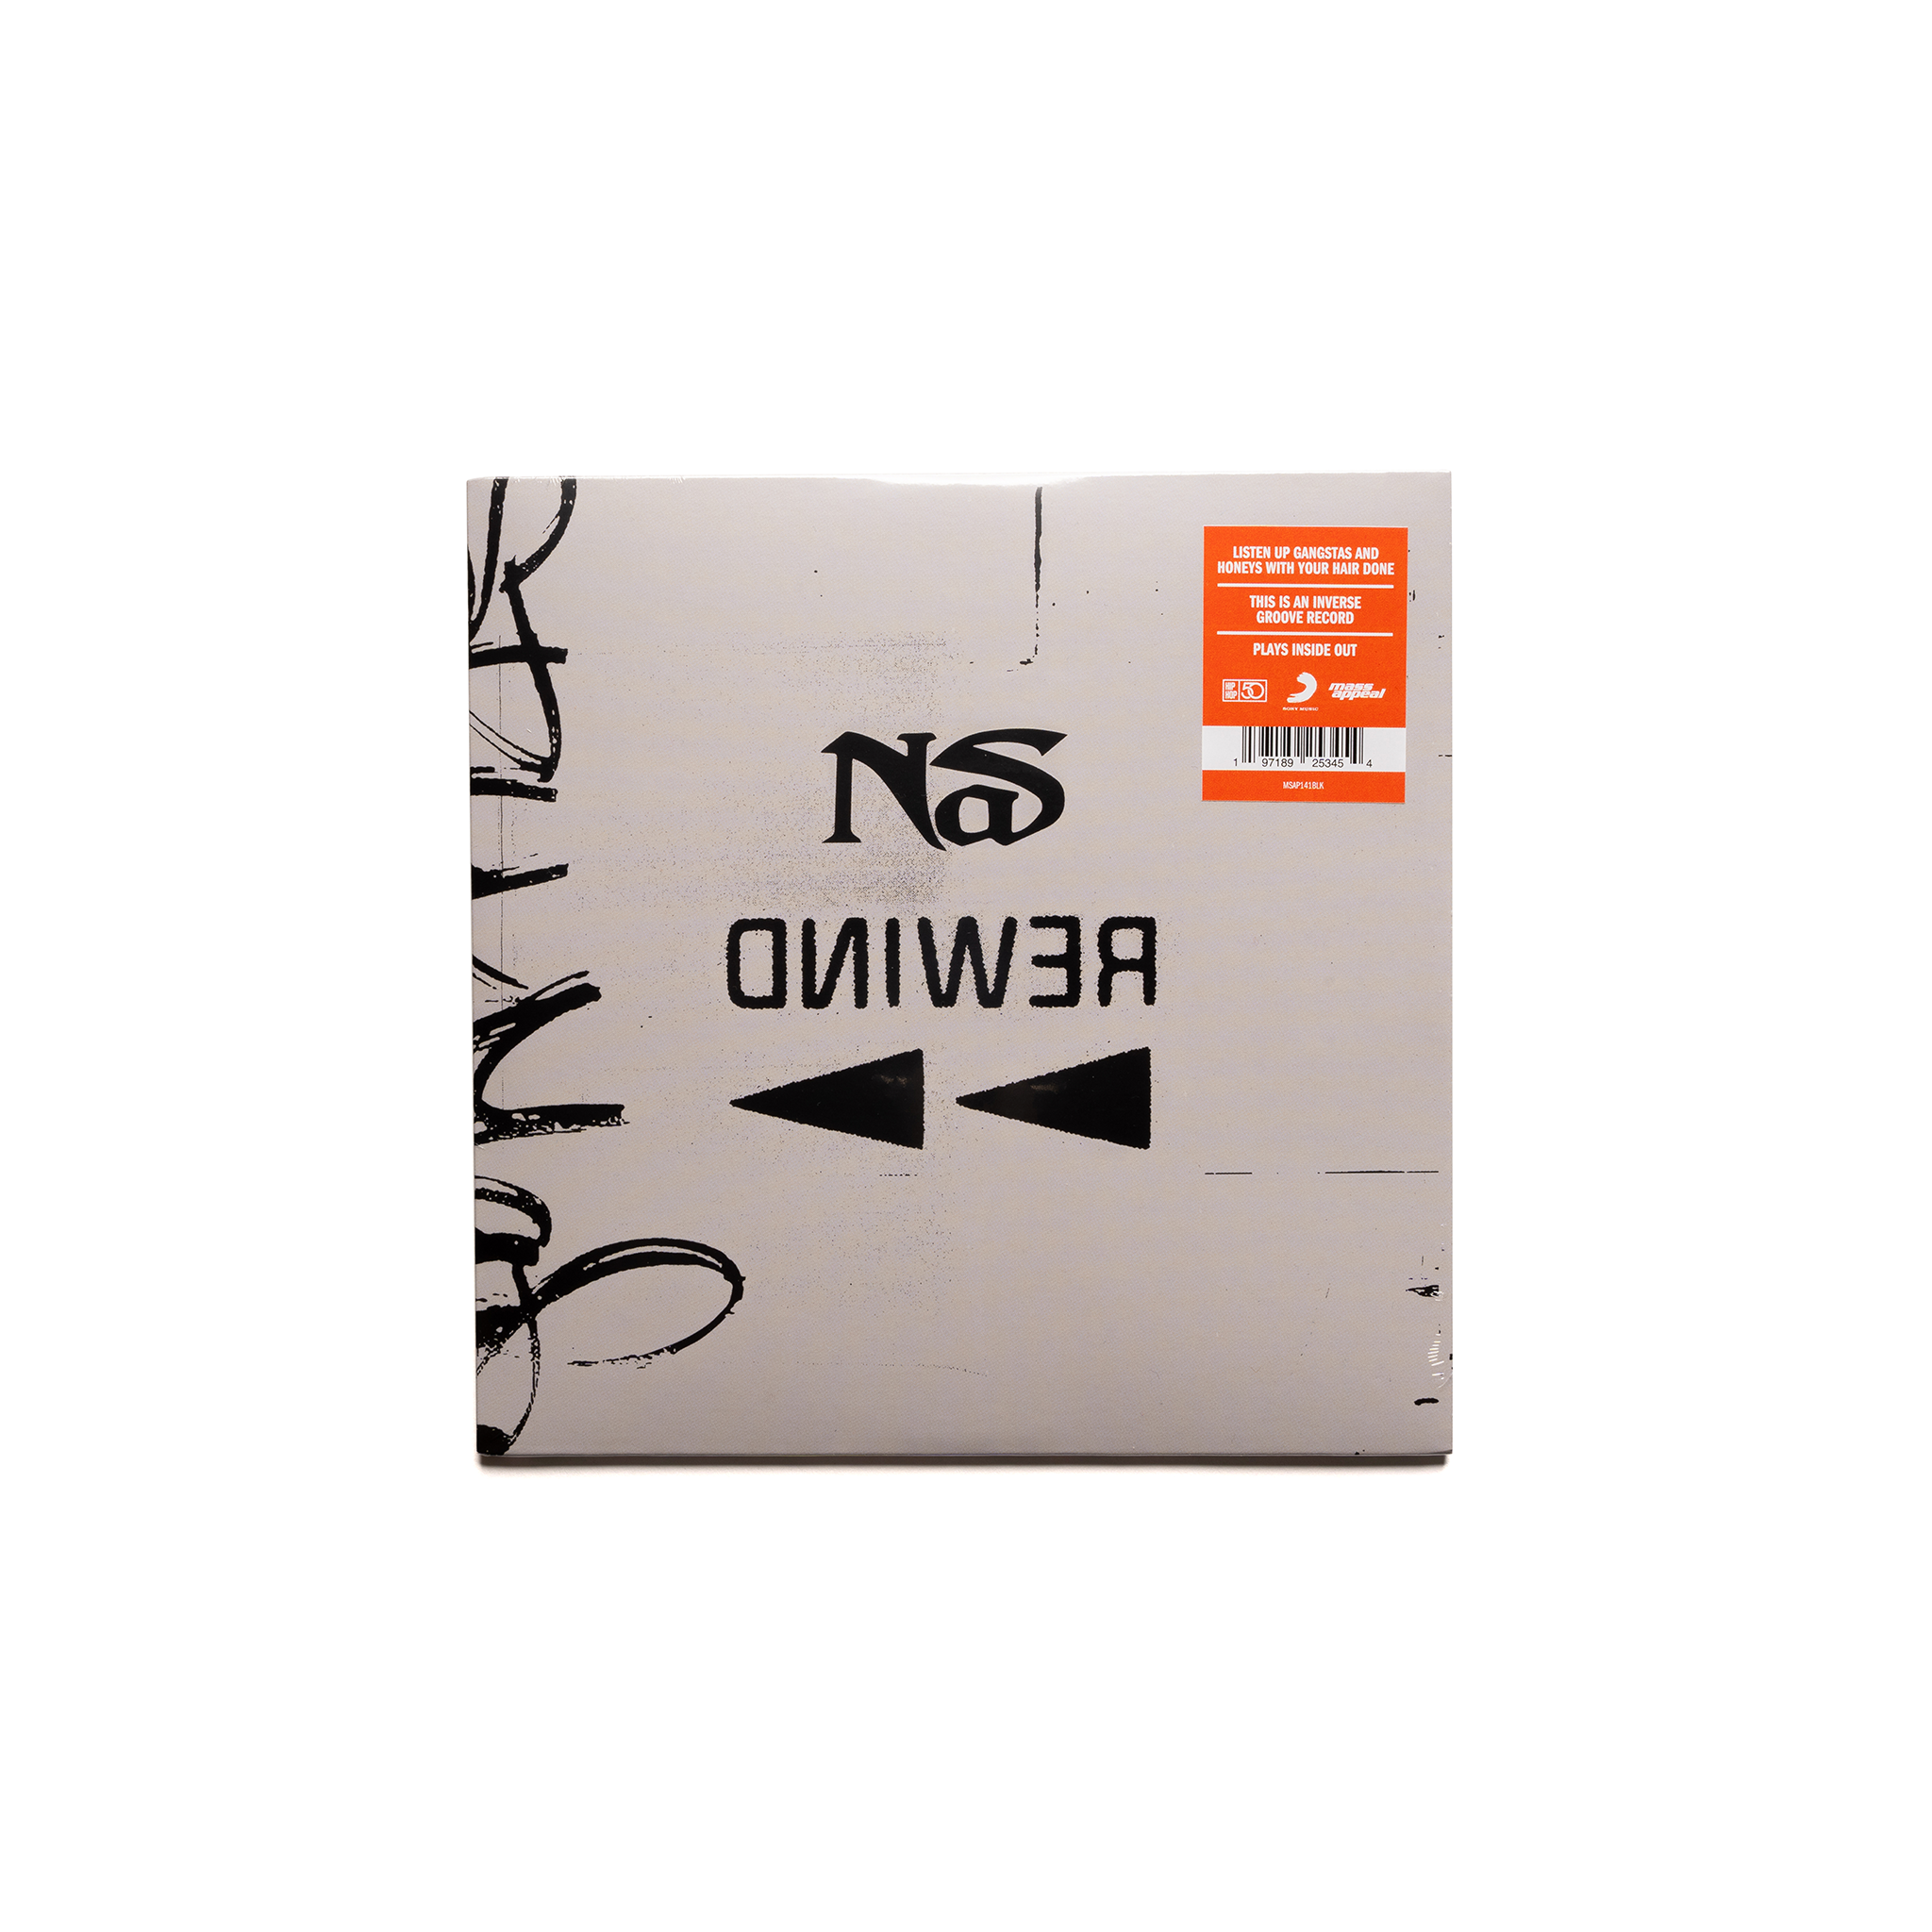 NAS Rewind 45 RPM 7 Silver Color Vinyl Single (Now Shipping!)